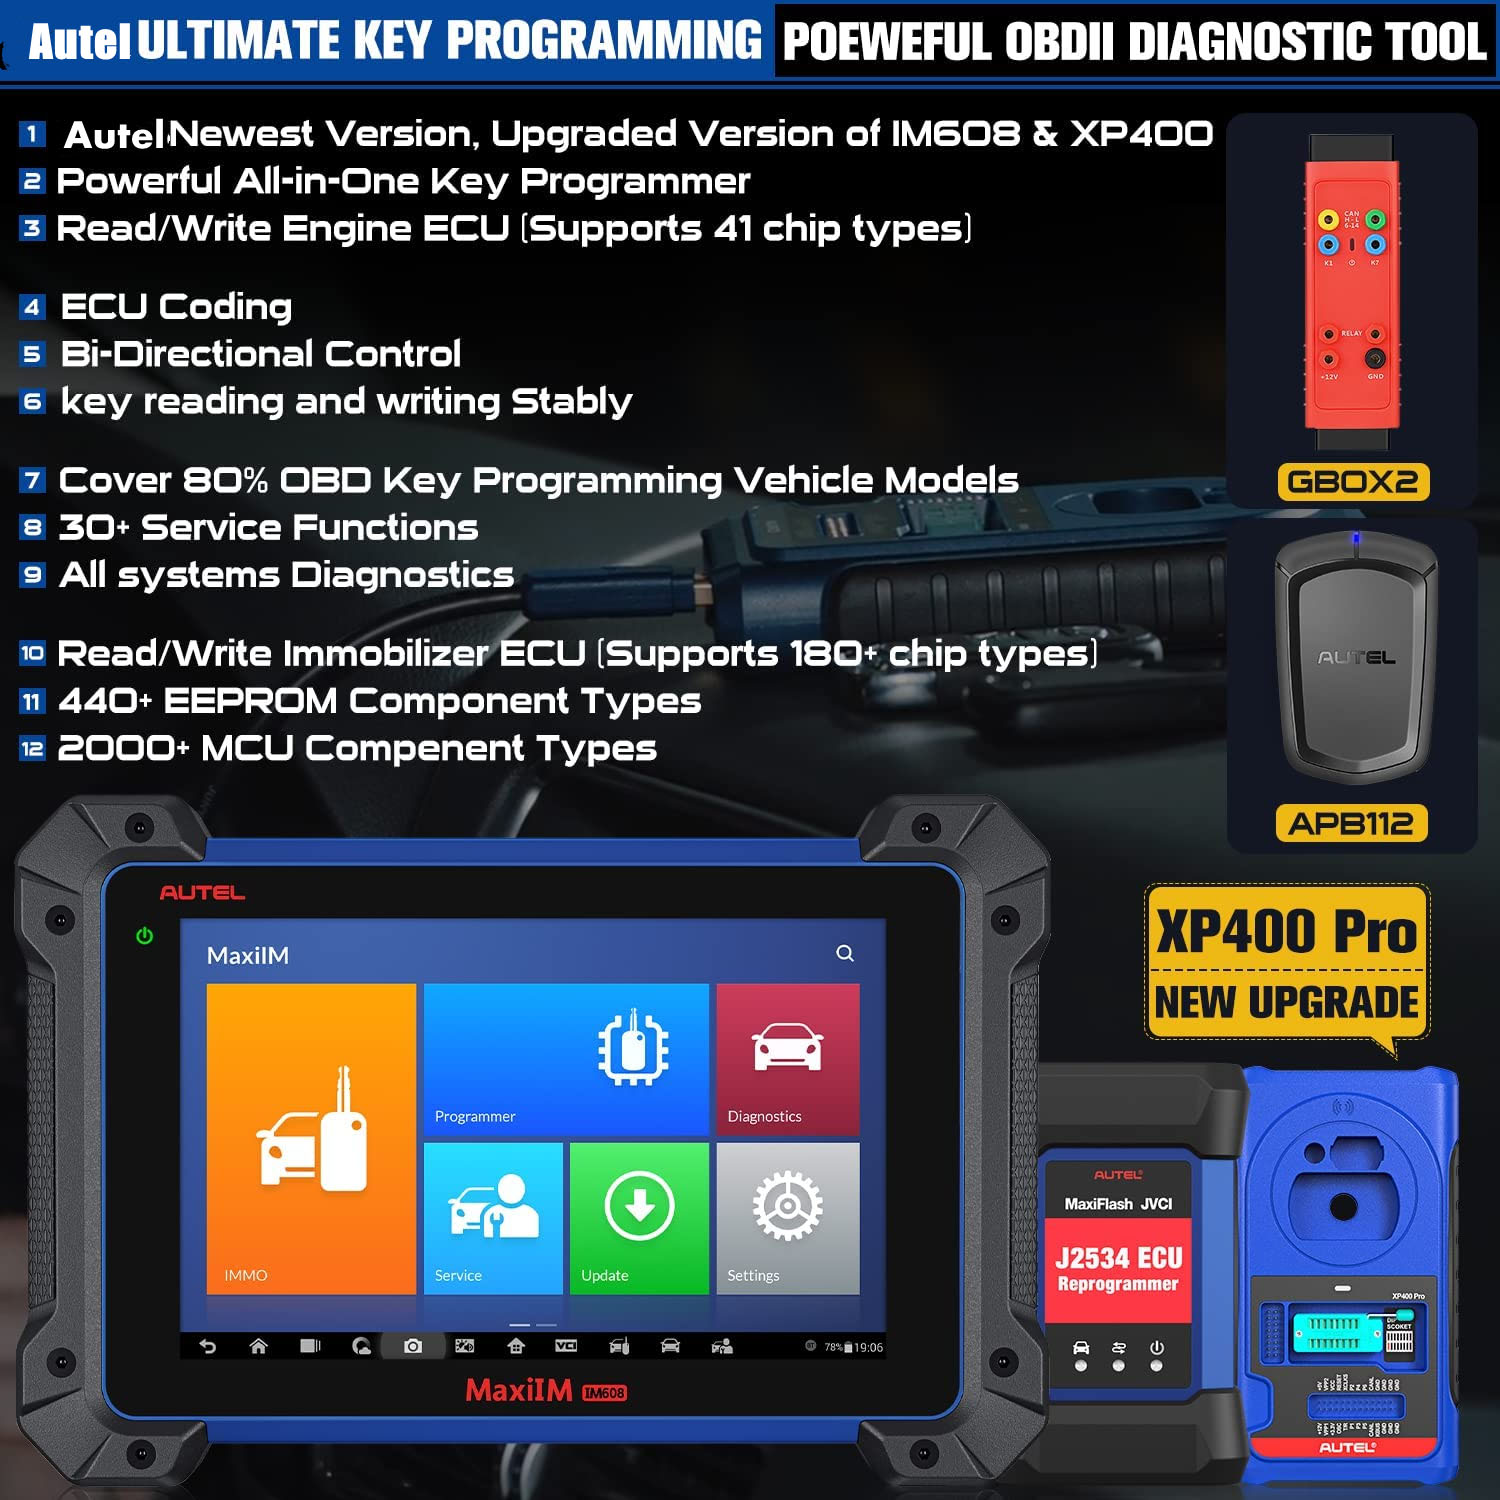 Autel im608 pro features